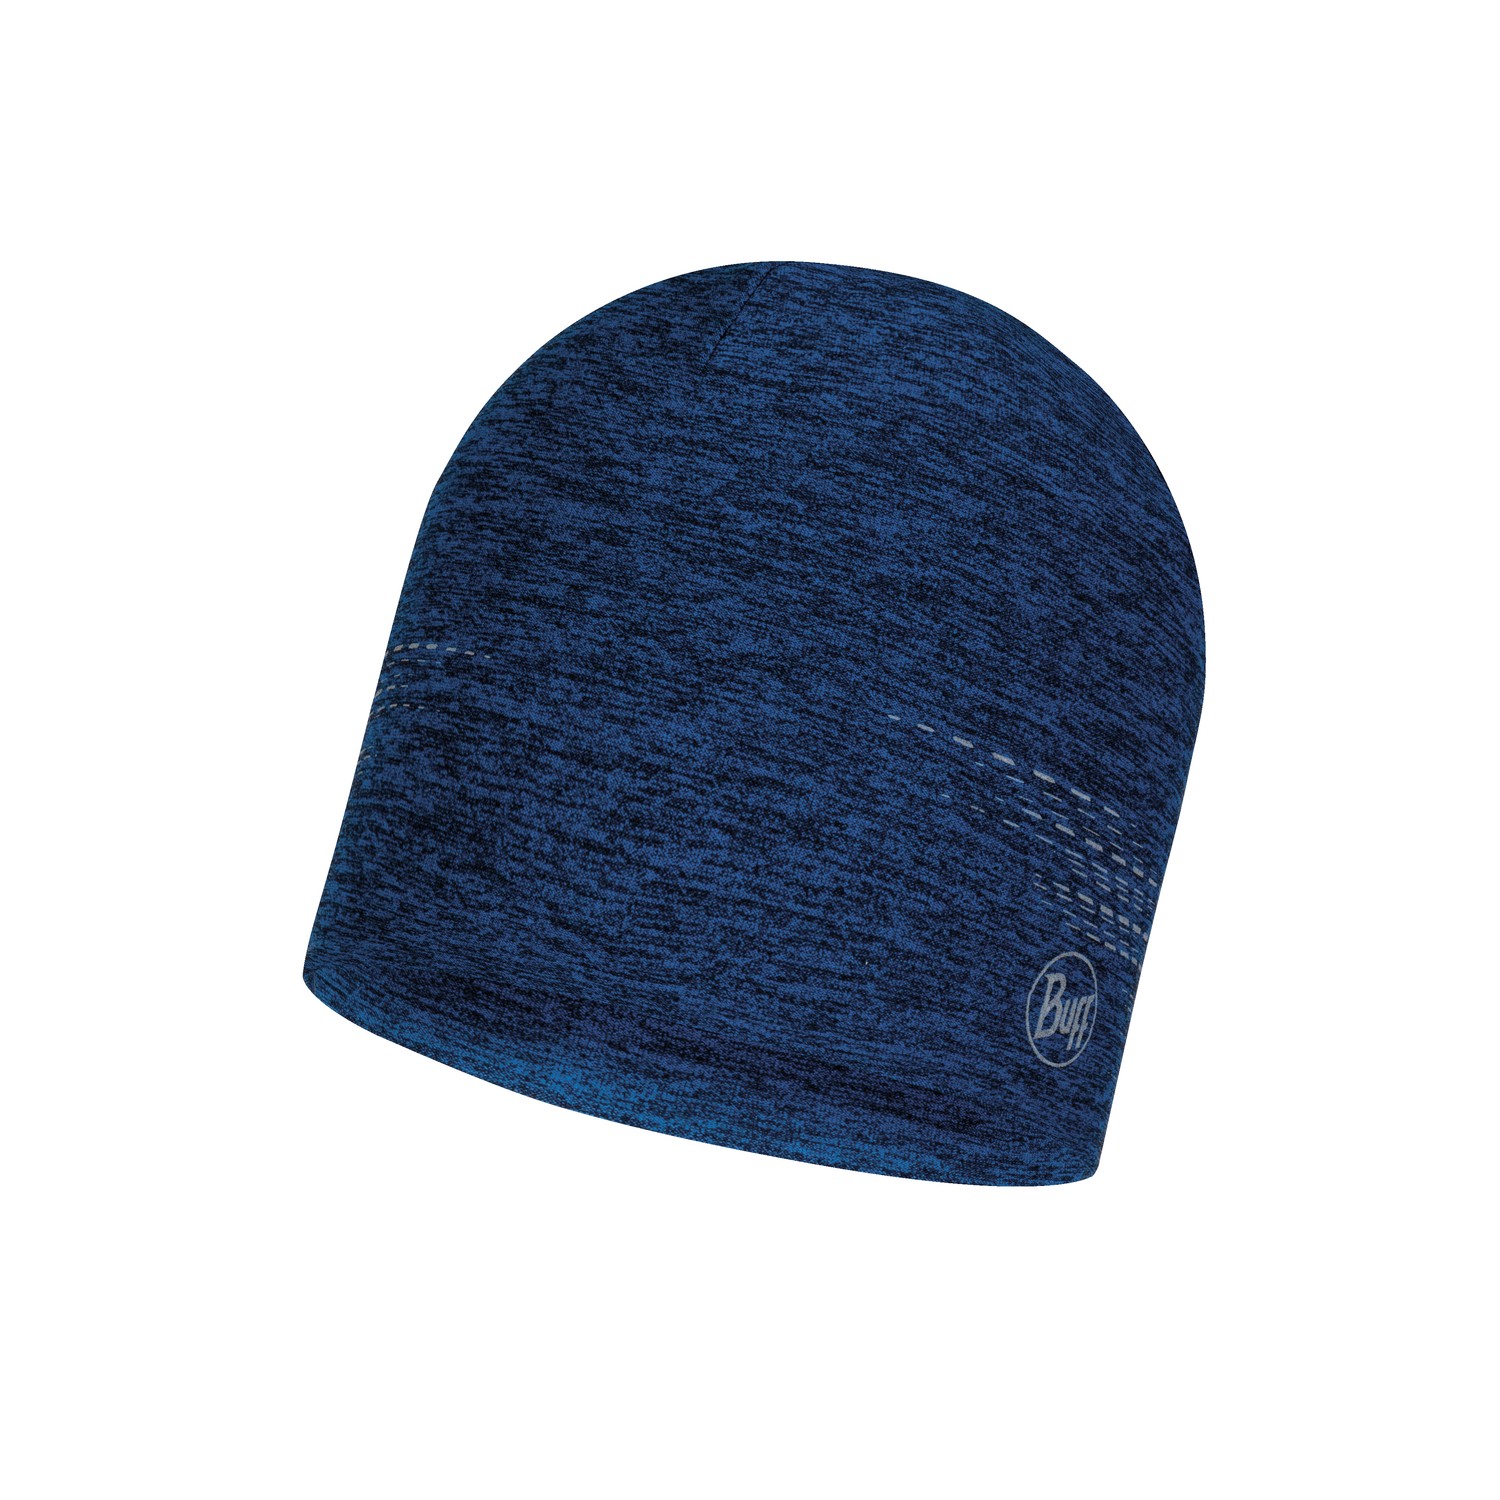 Buff Dryflx Bonnet - R Blue